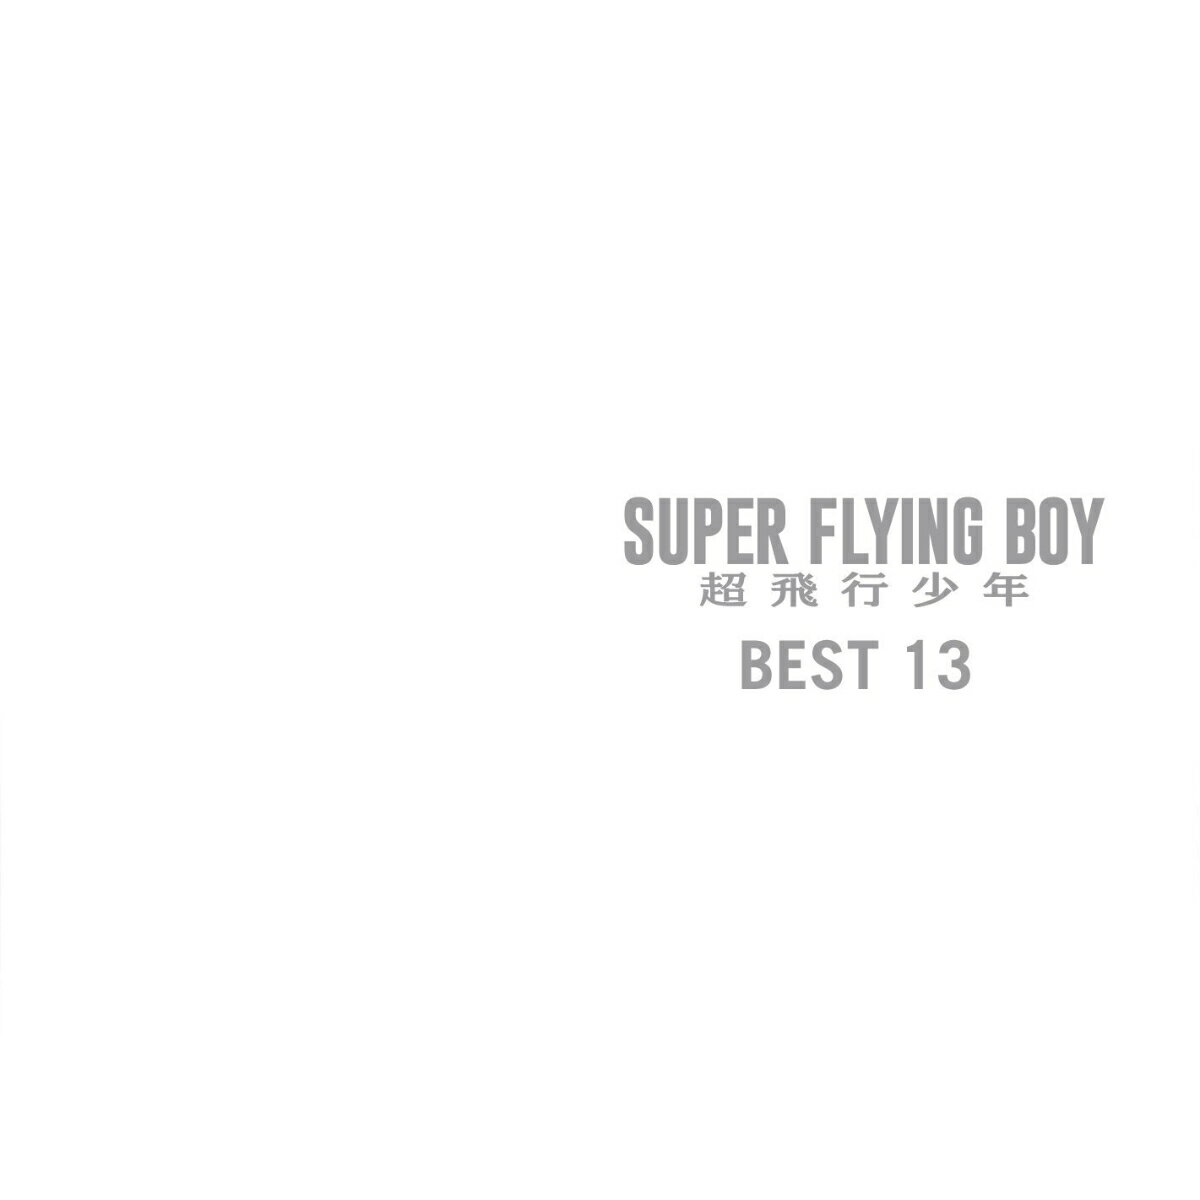 SUPER FLYING BOY BEST 13